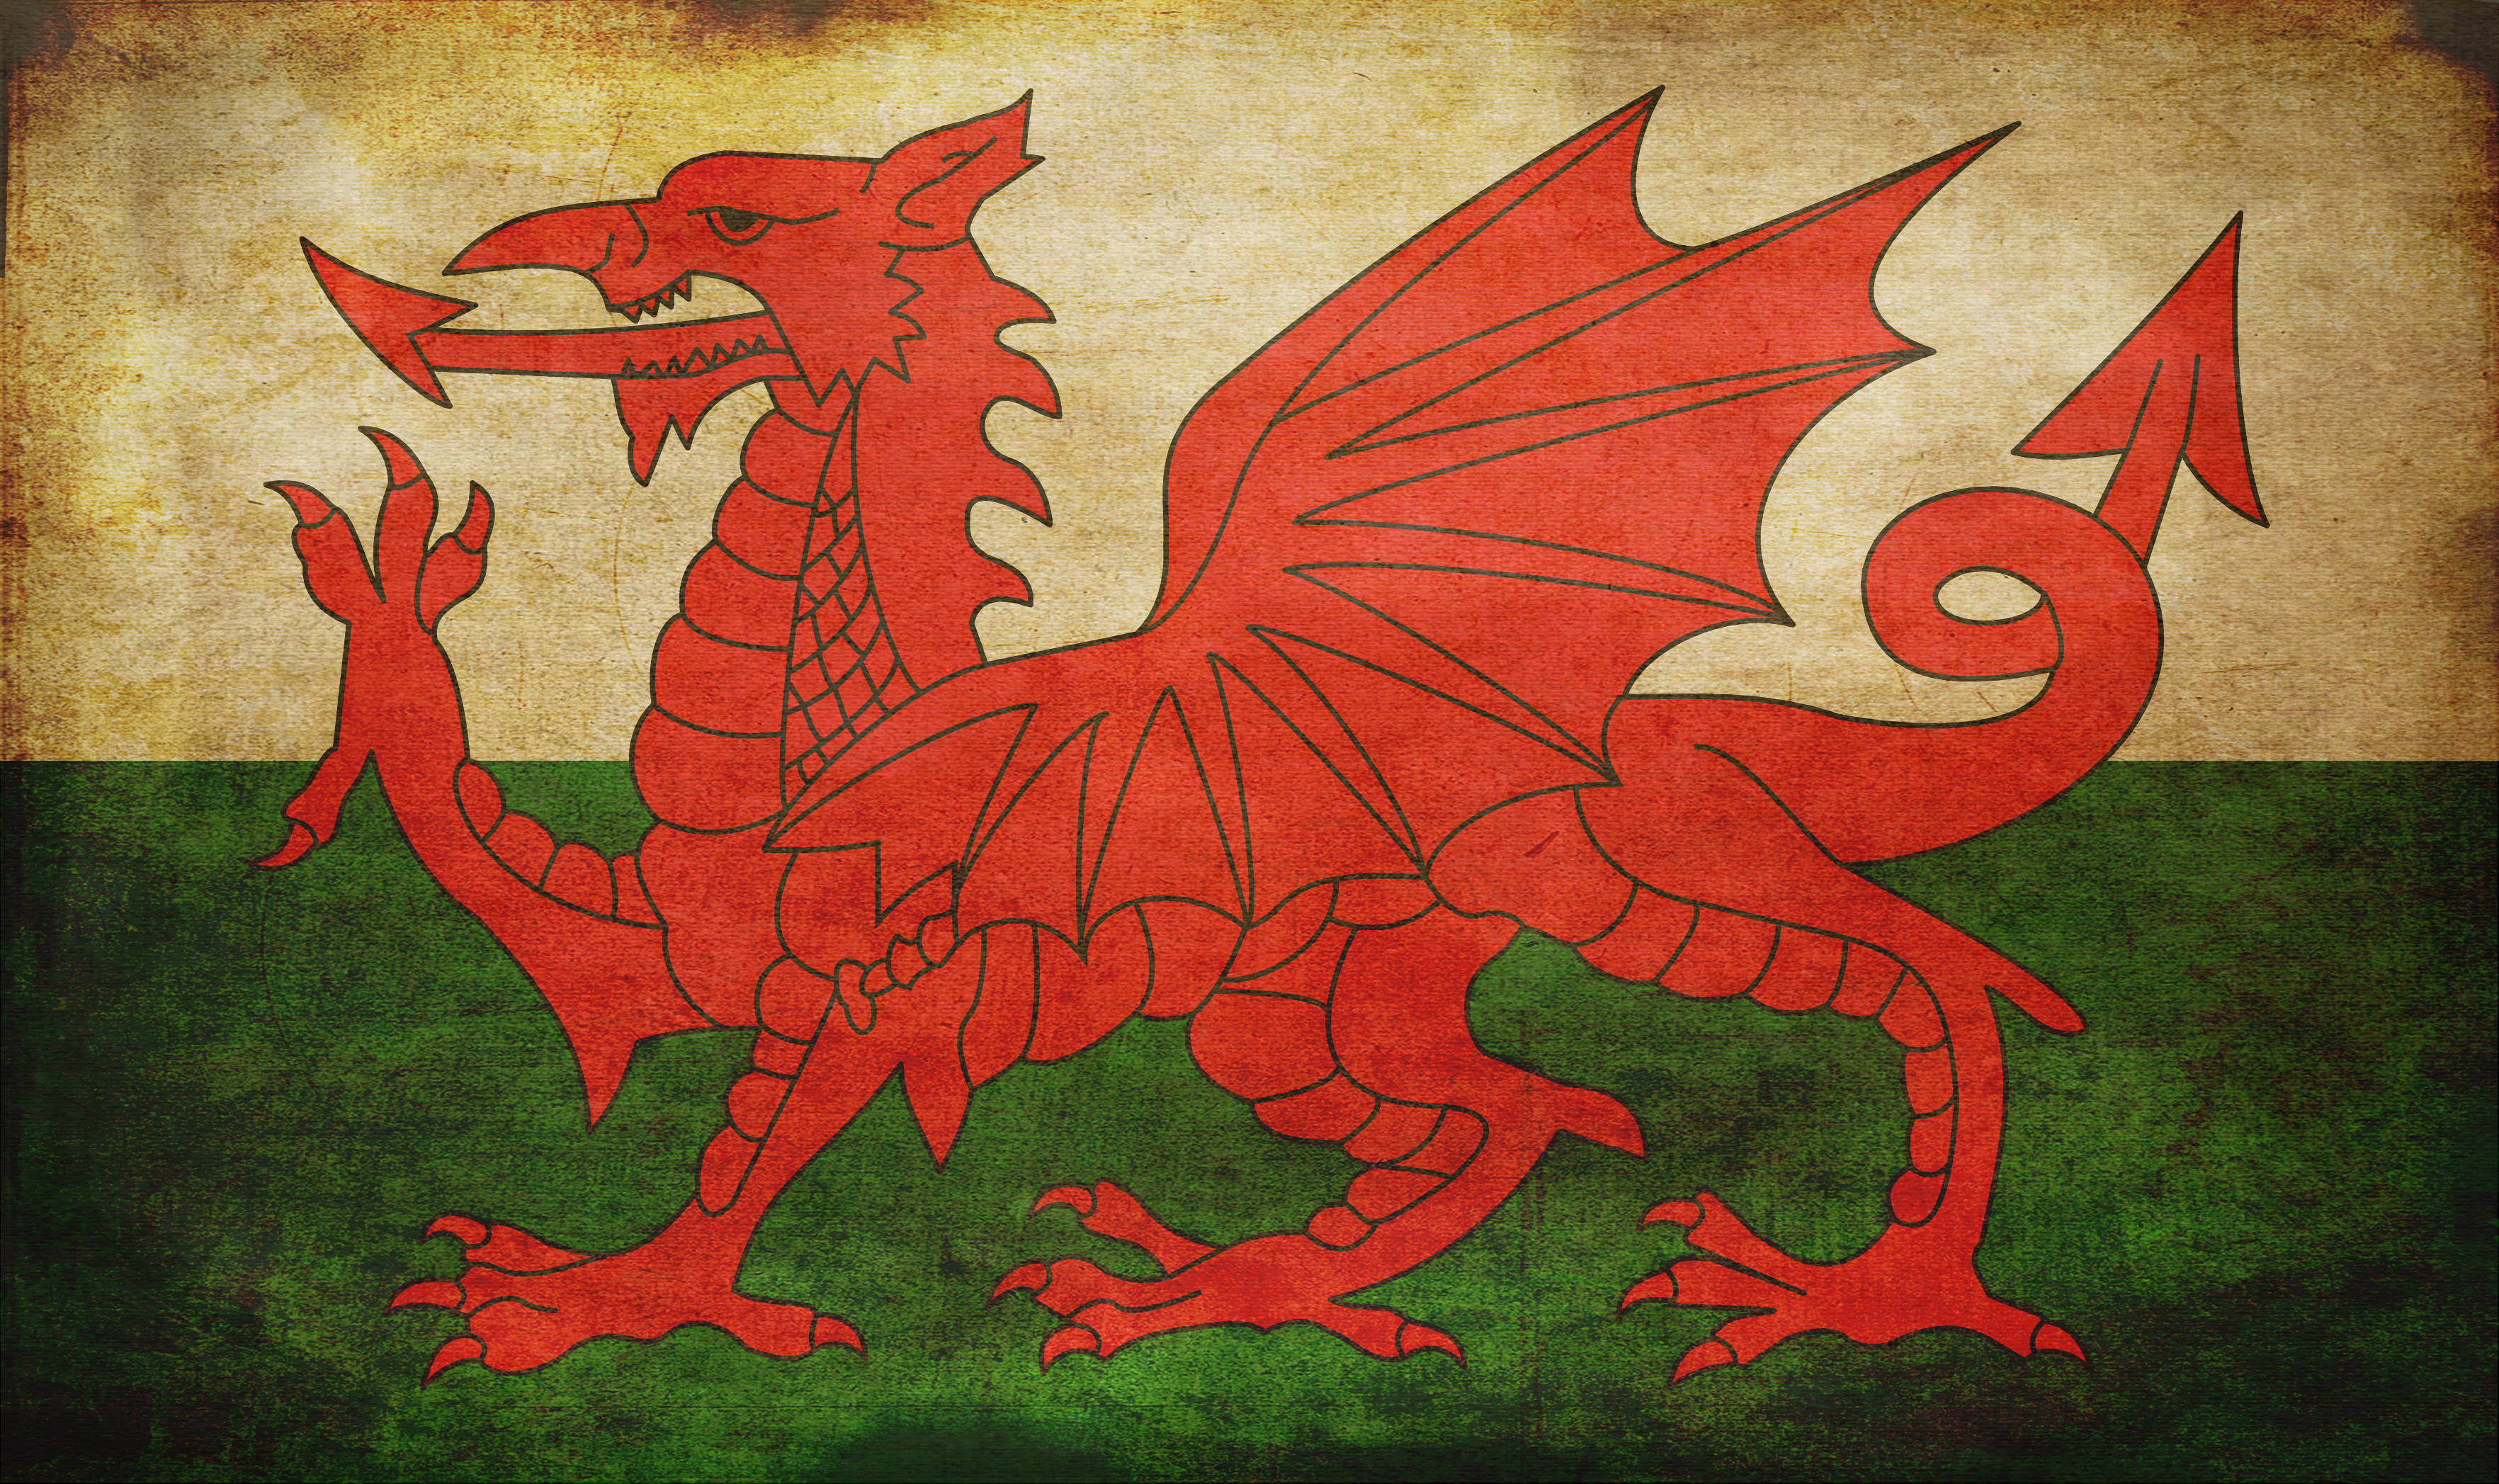 Wales - Grunge by tonemapped on DeviantArt